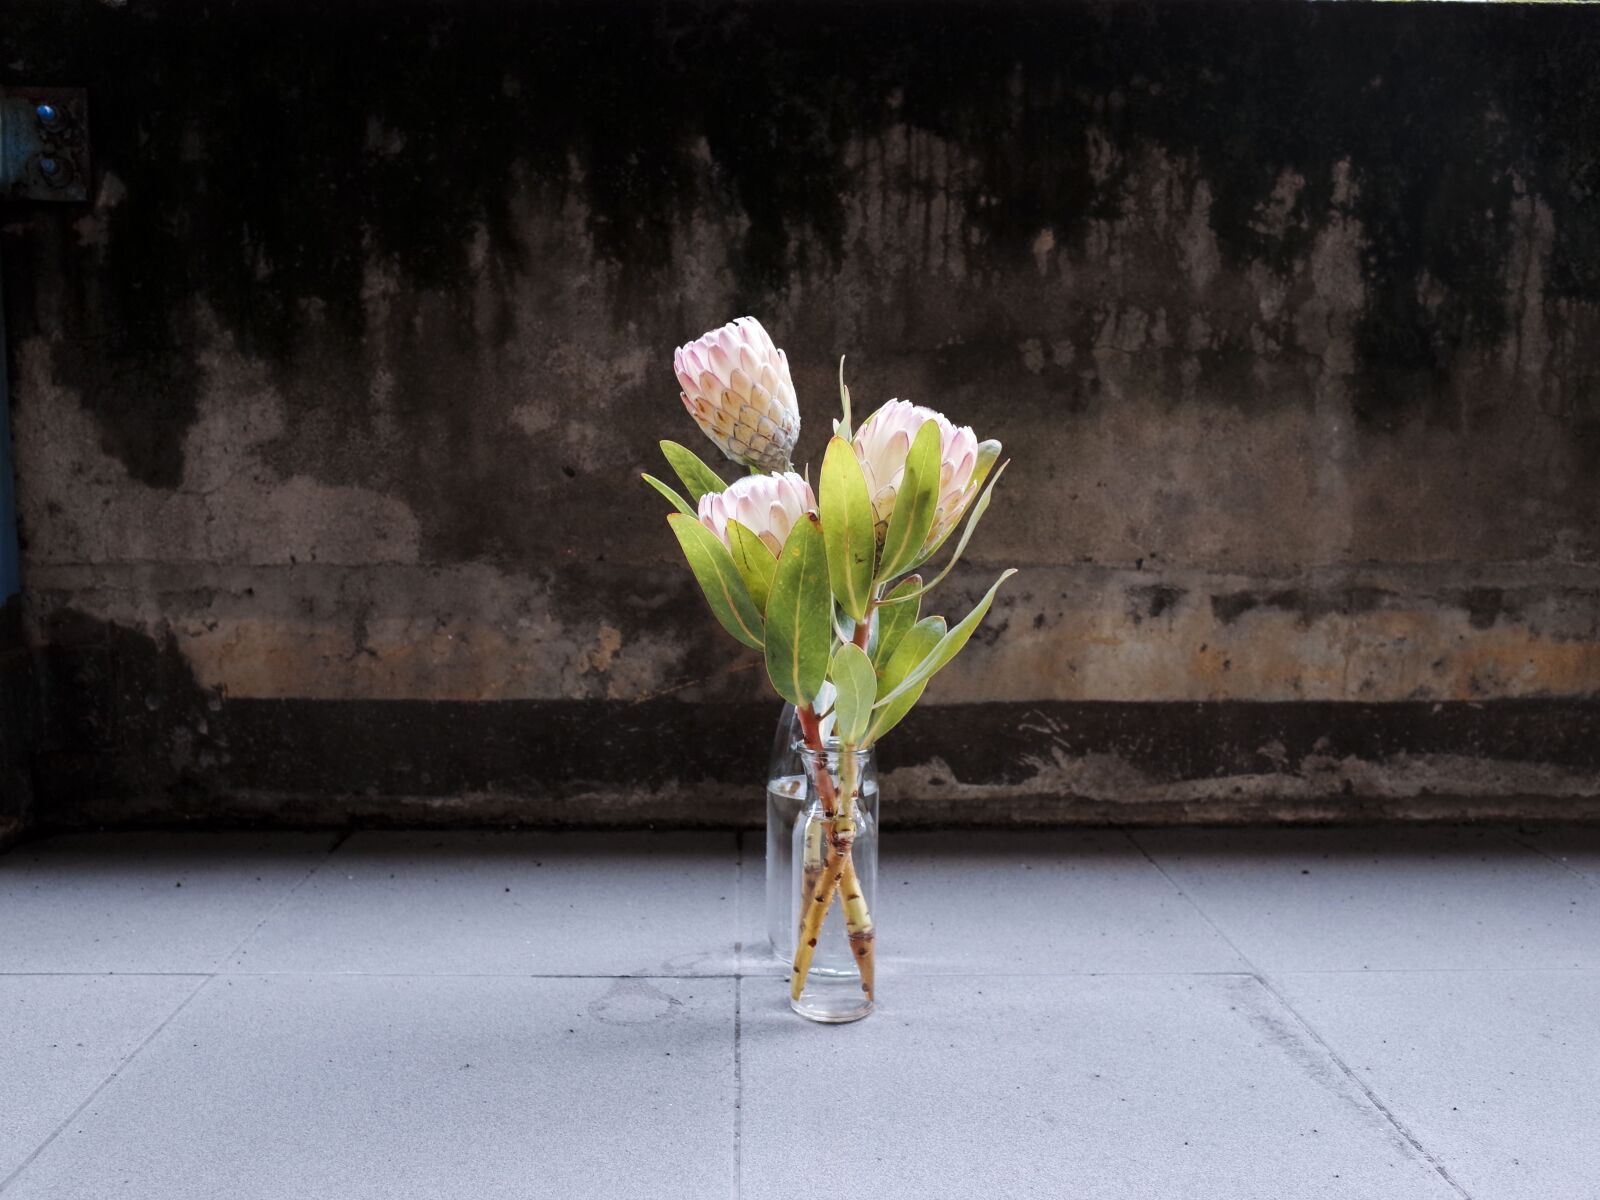 Ricoh GR sample photo. King protea, flower, vase photography